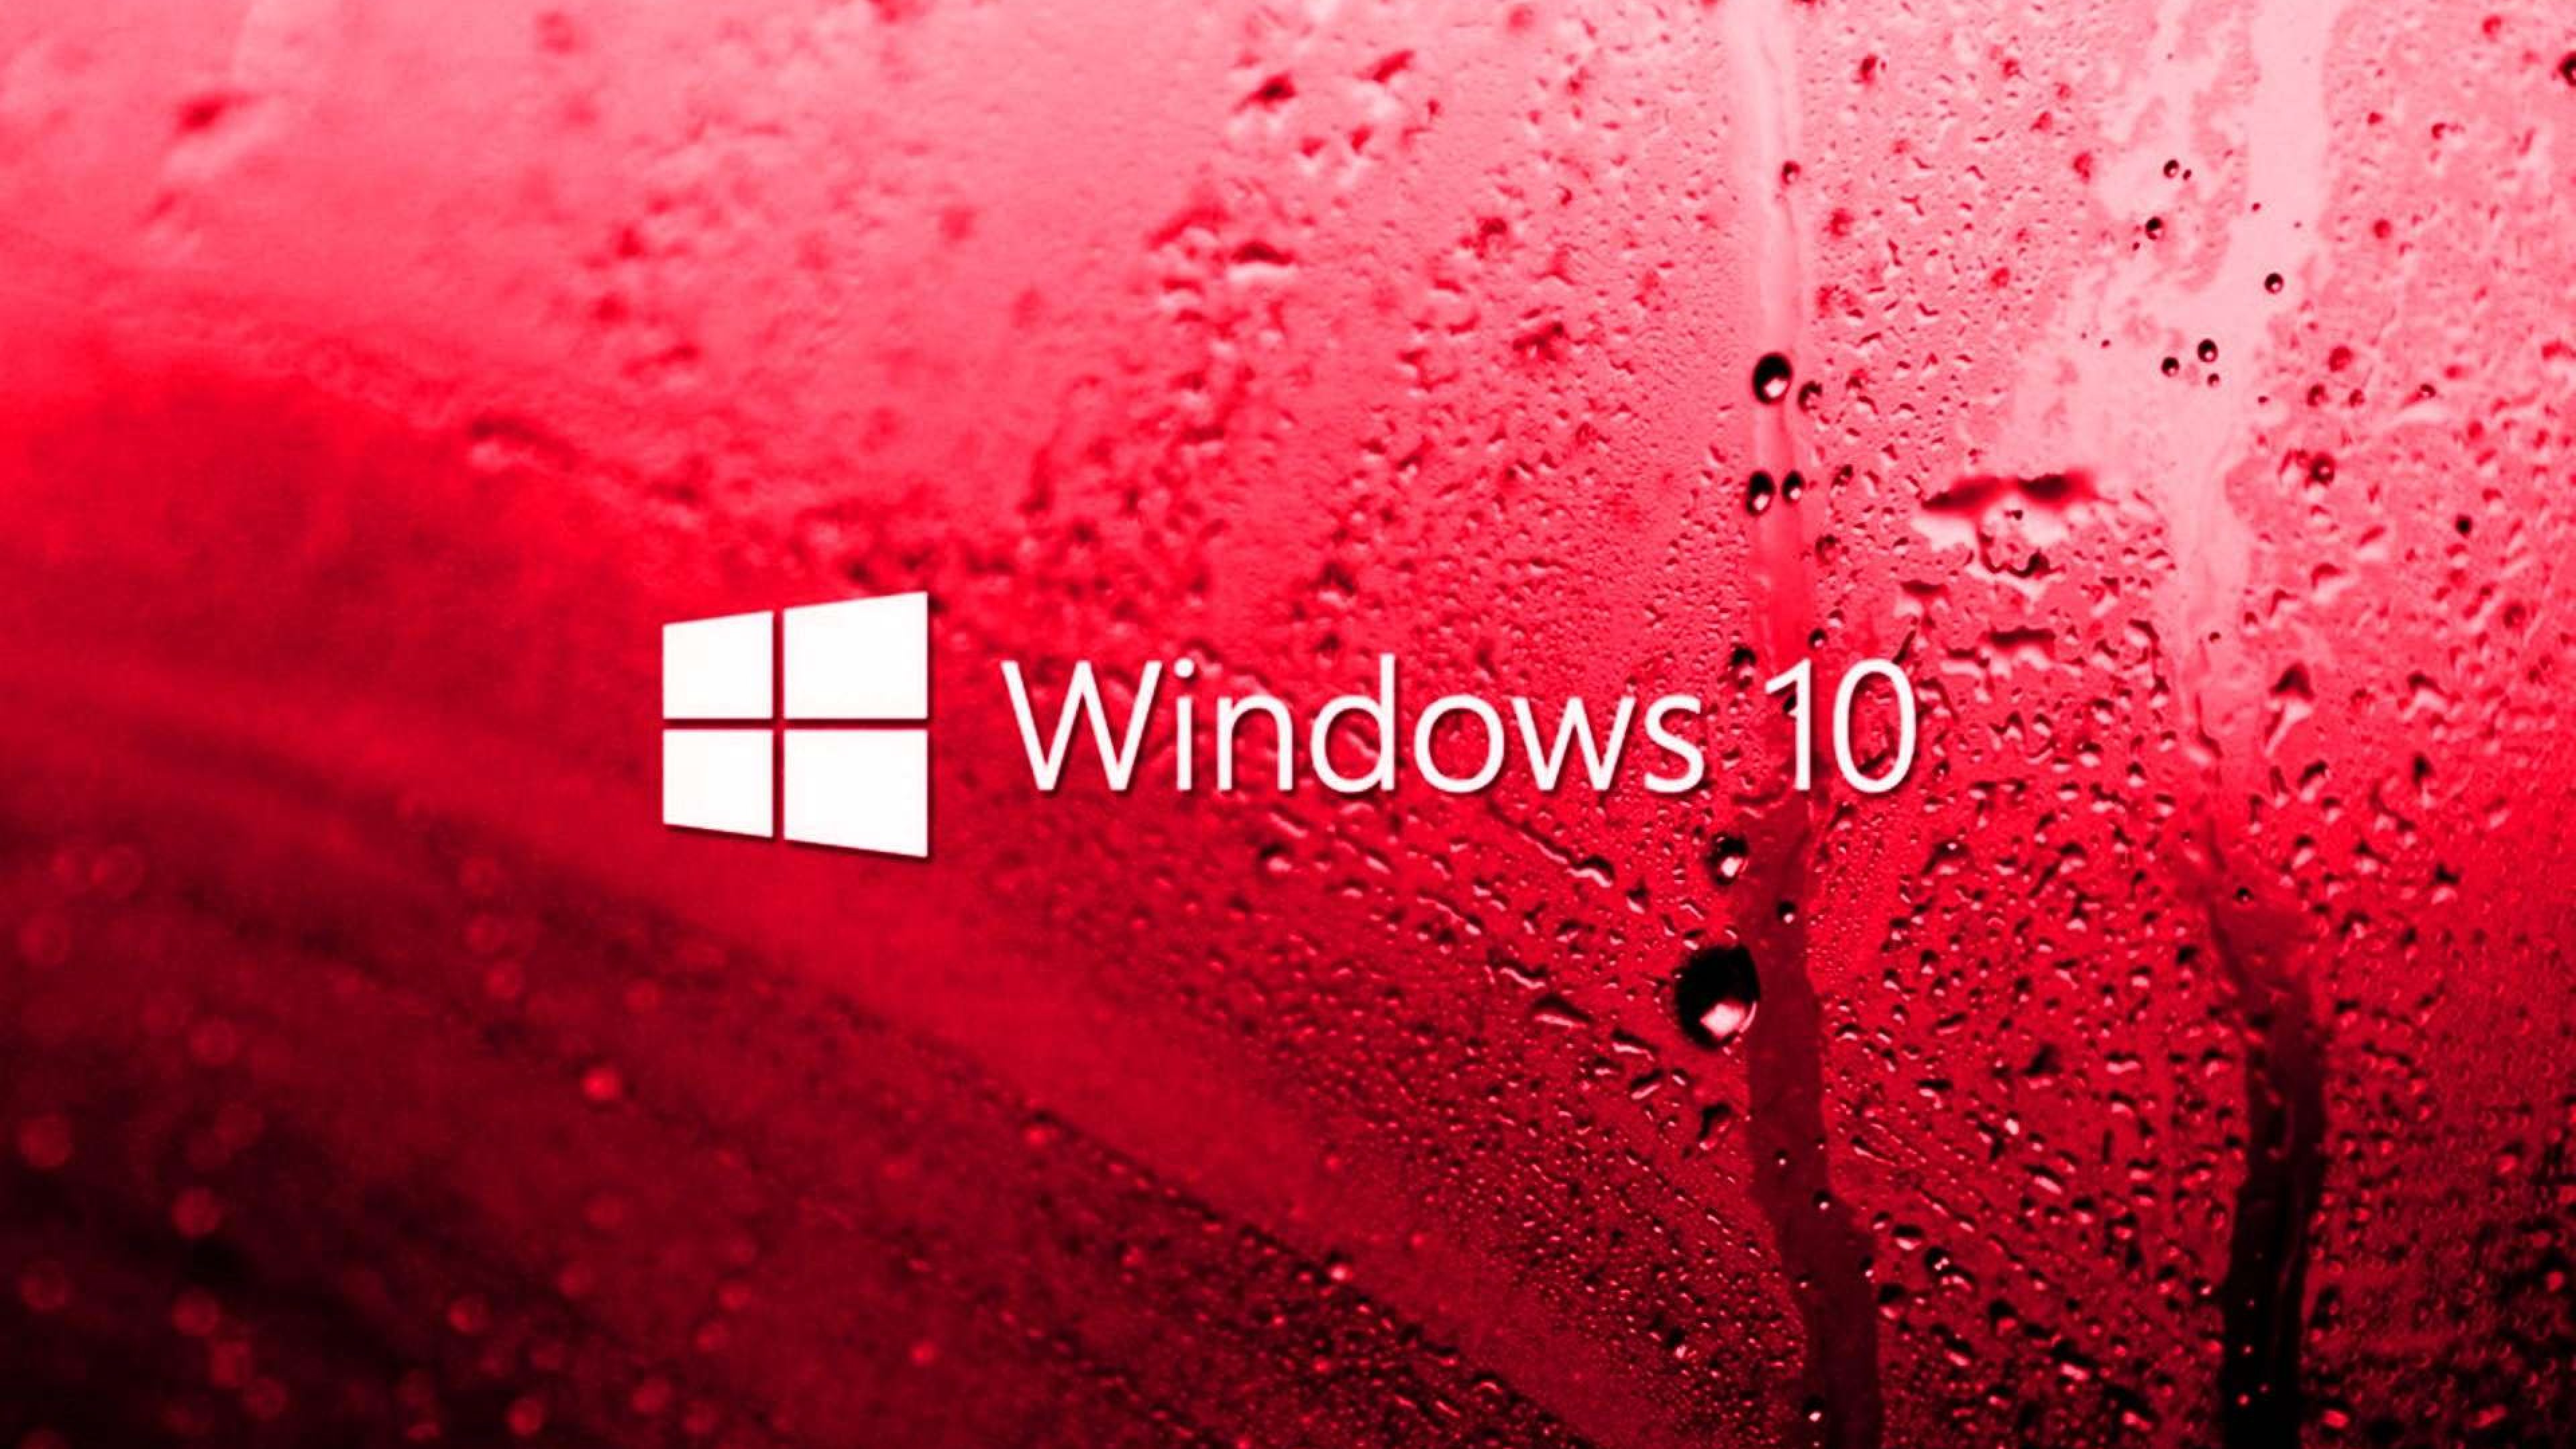 Windows 10 4k Wallpaper Download - 3840x2160 Wallpaper 